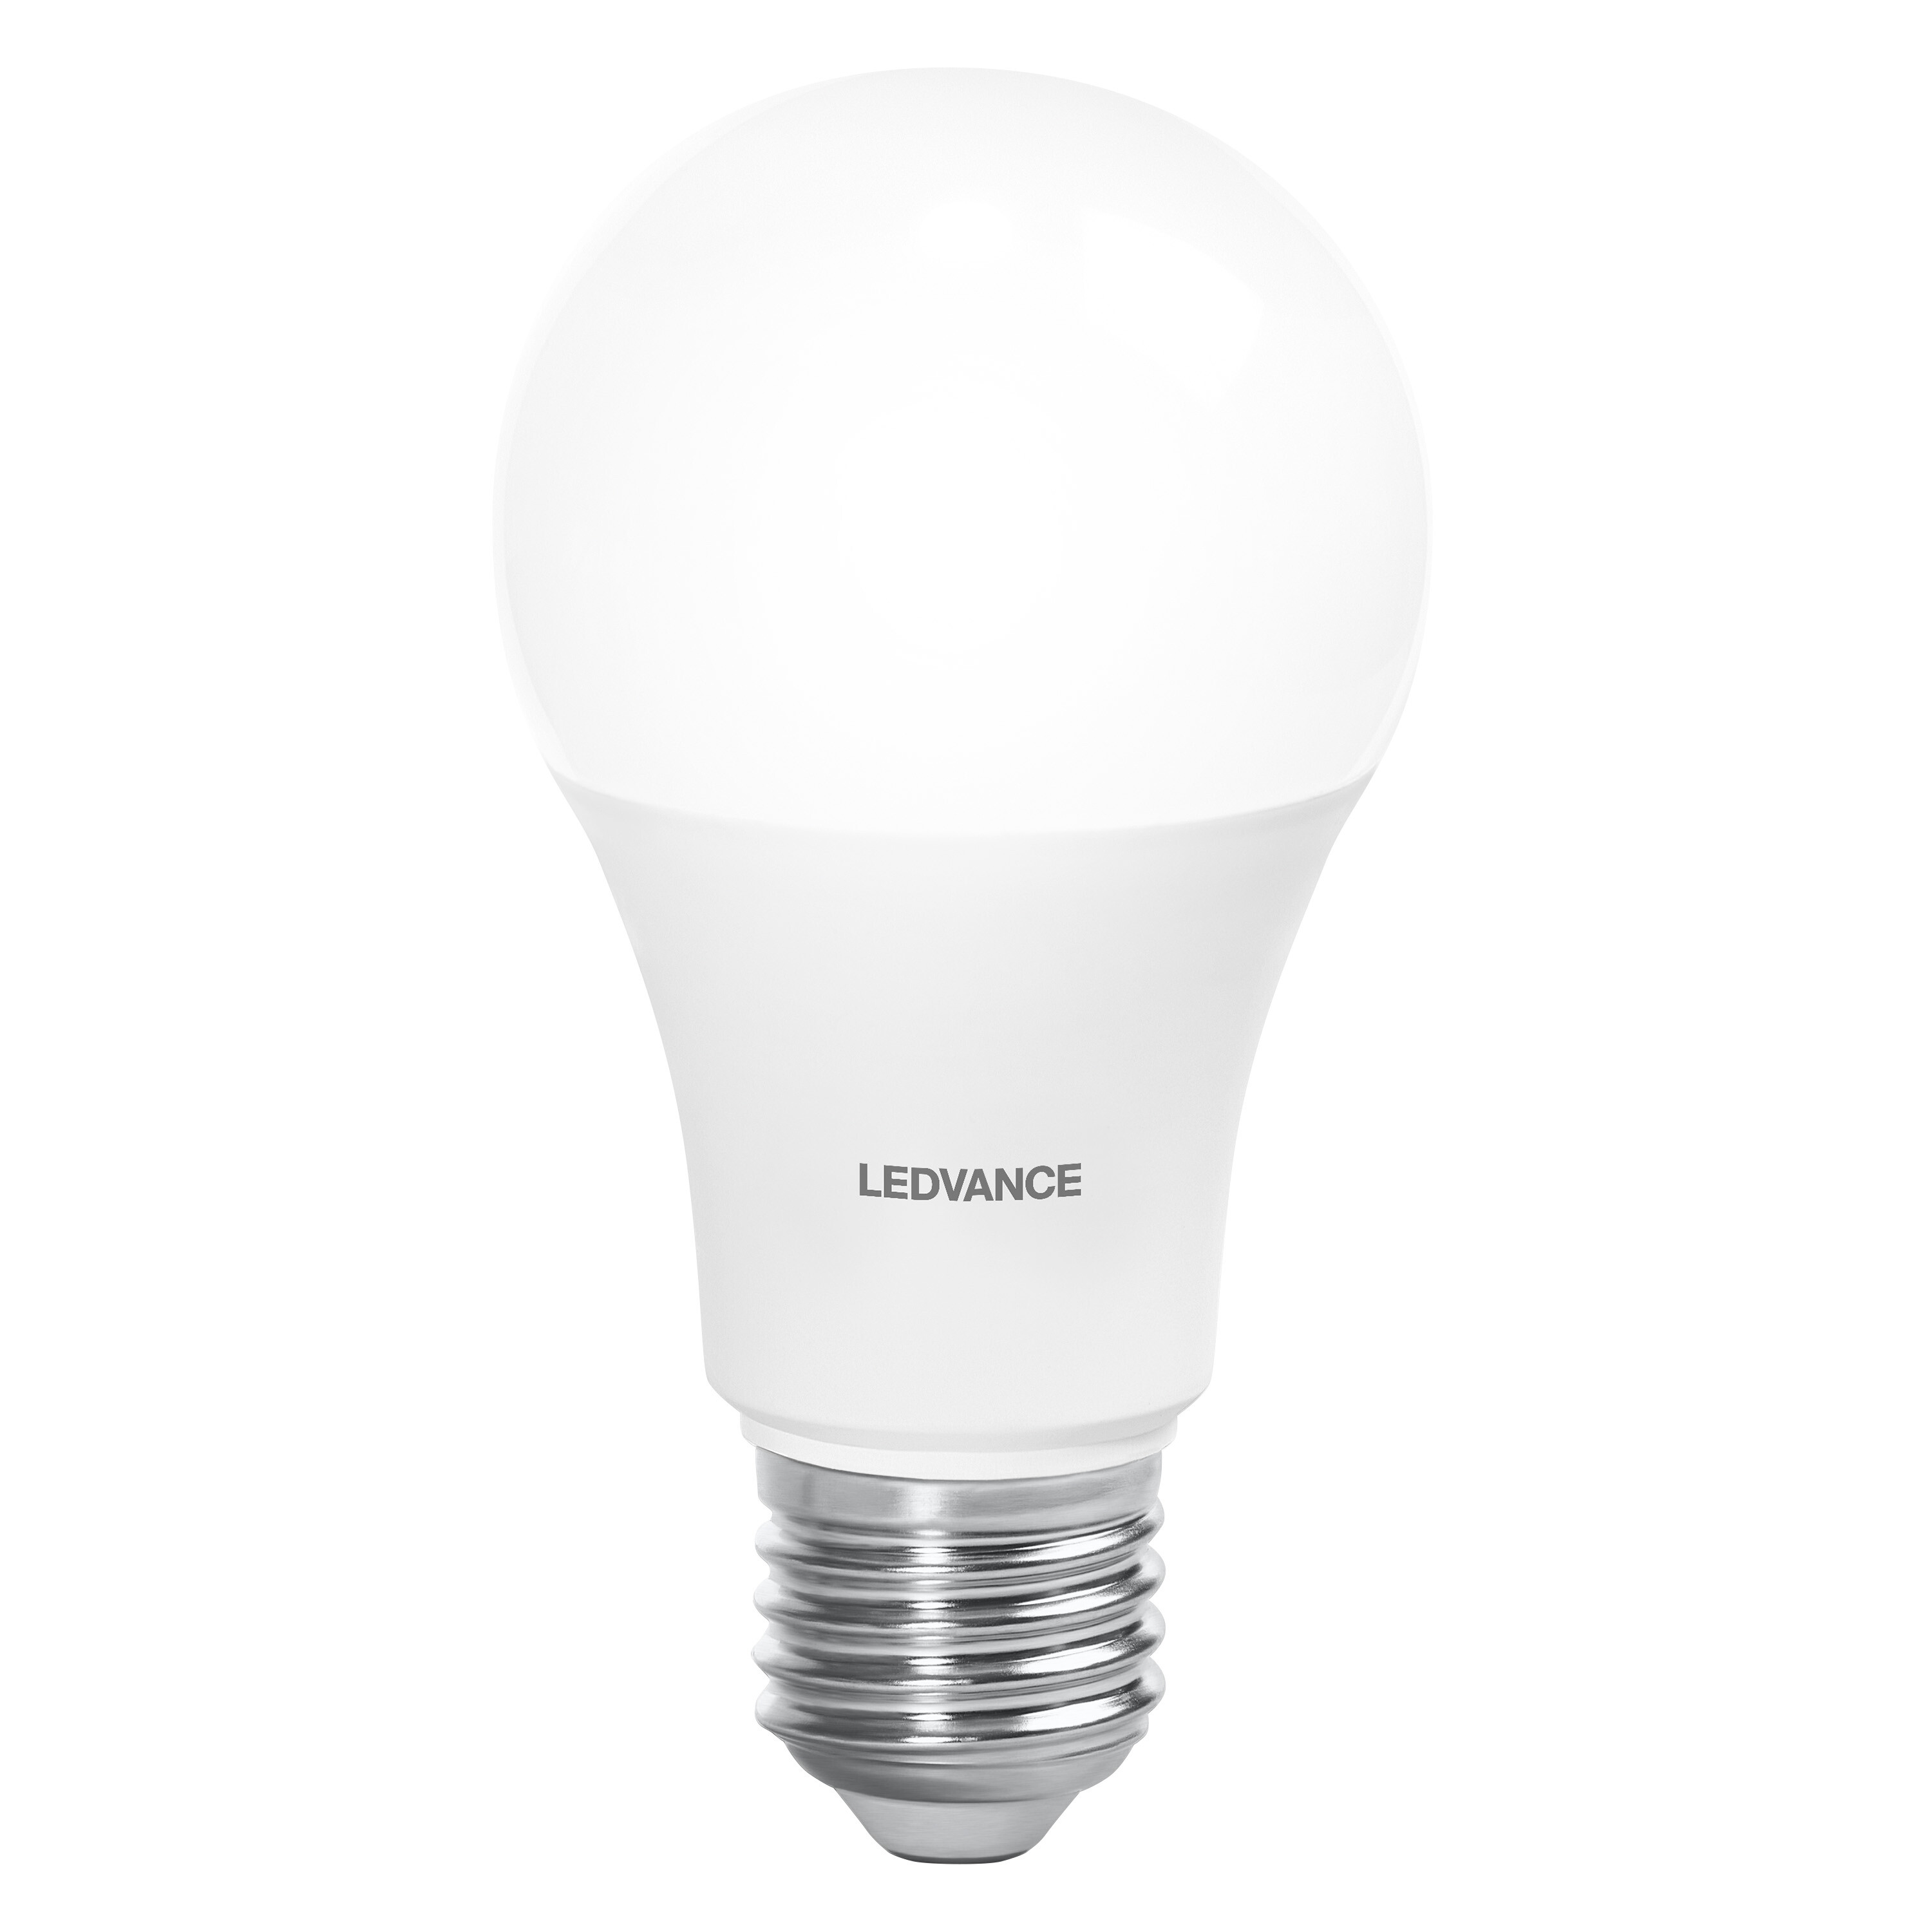 750 Lichfarbe LED Lamps lumen SunHome Lampe änderbar LEDVANCE